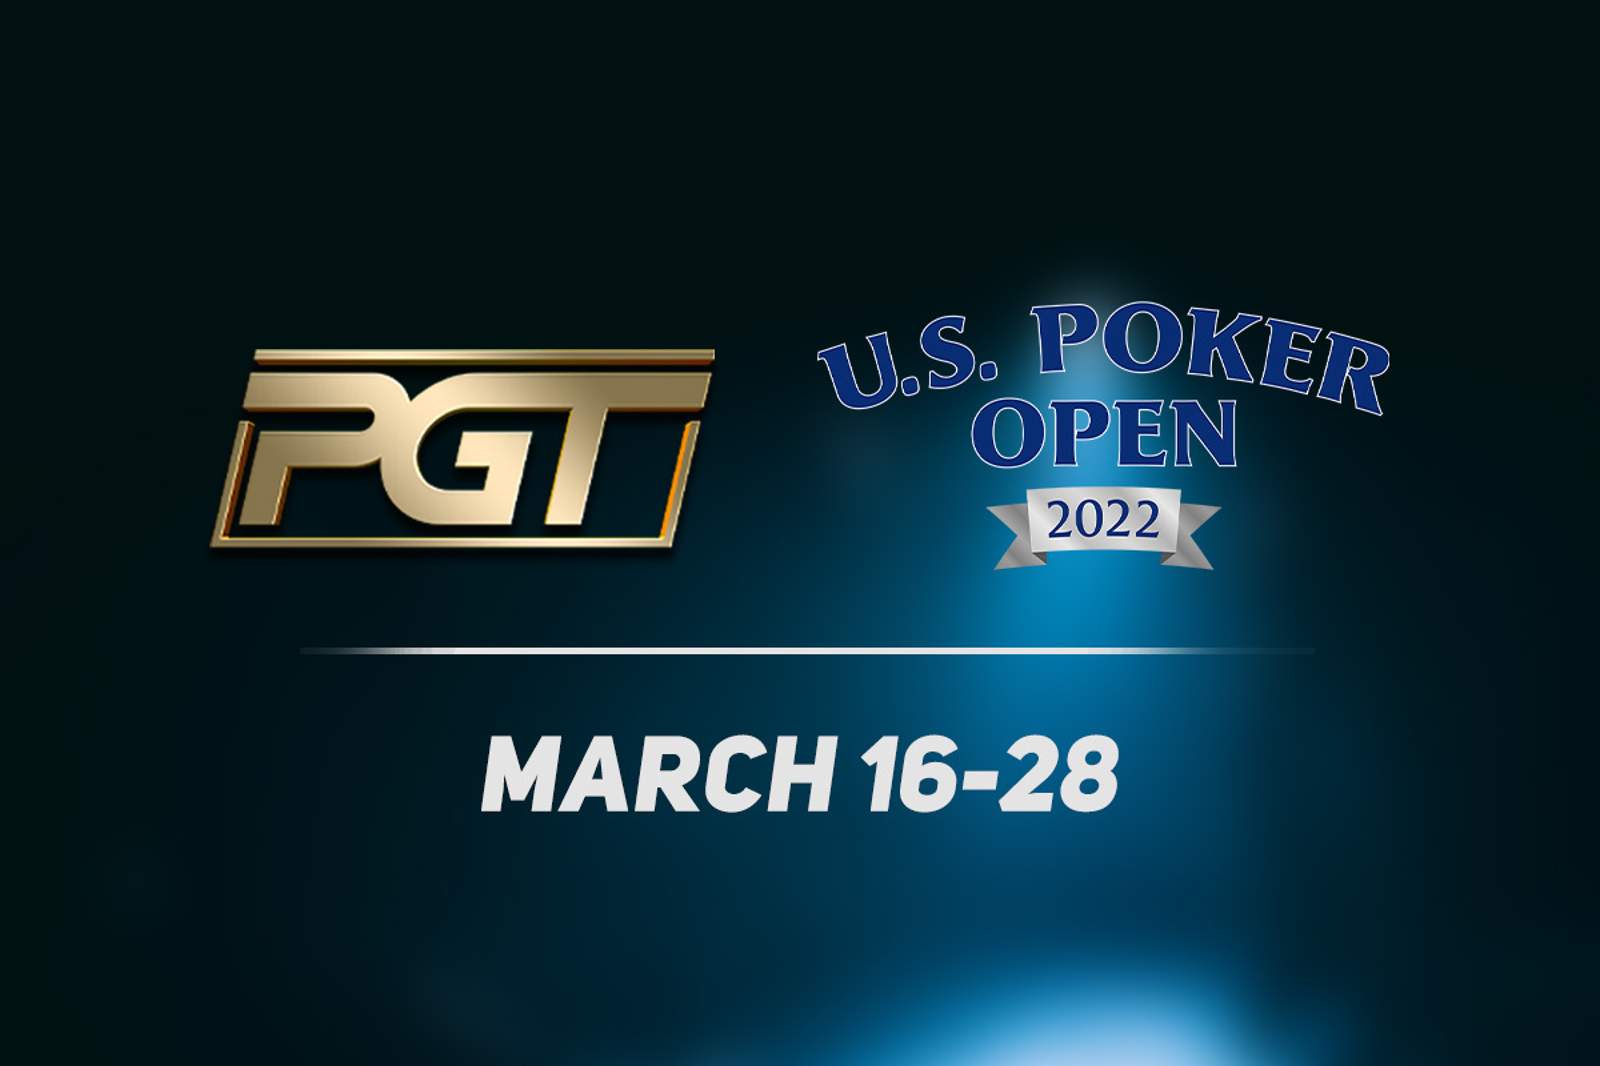 U.S. Poker Open 2022 Schedule: March 16-28